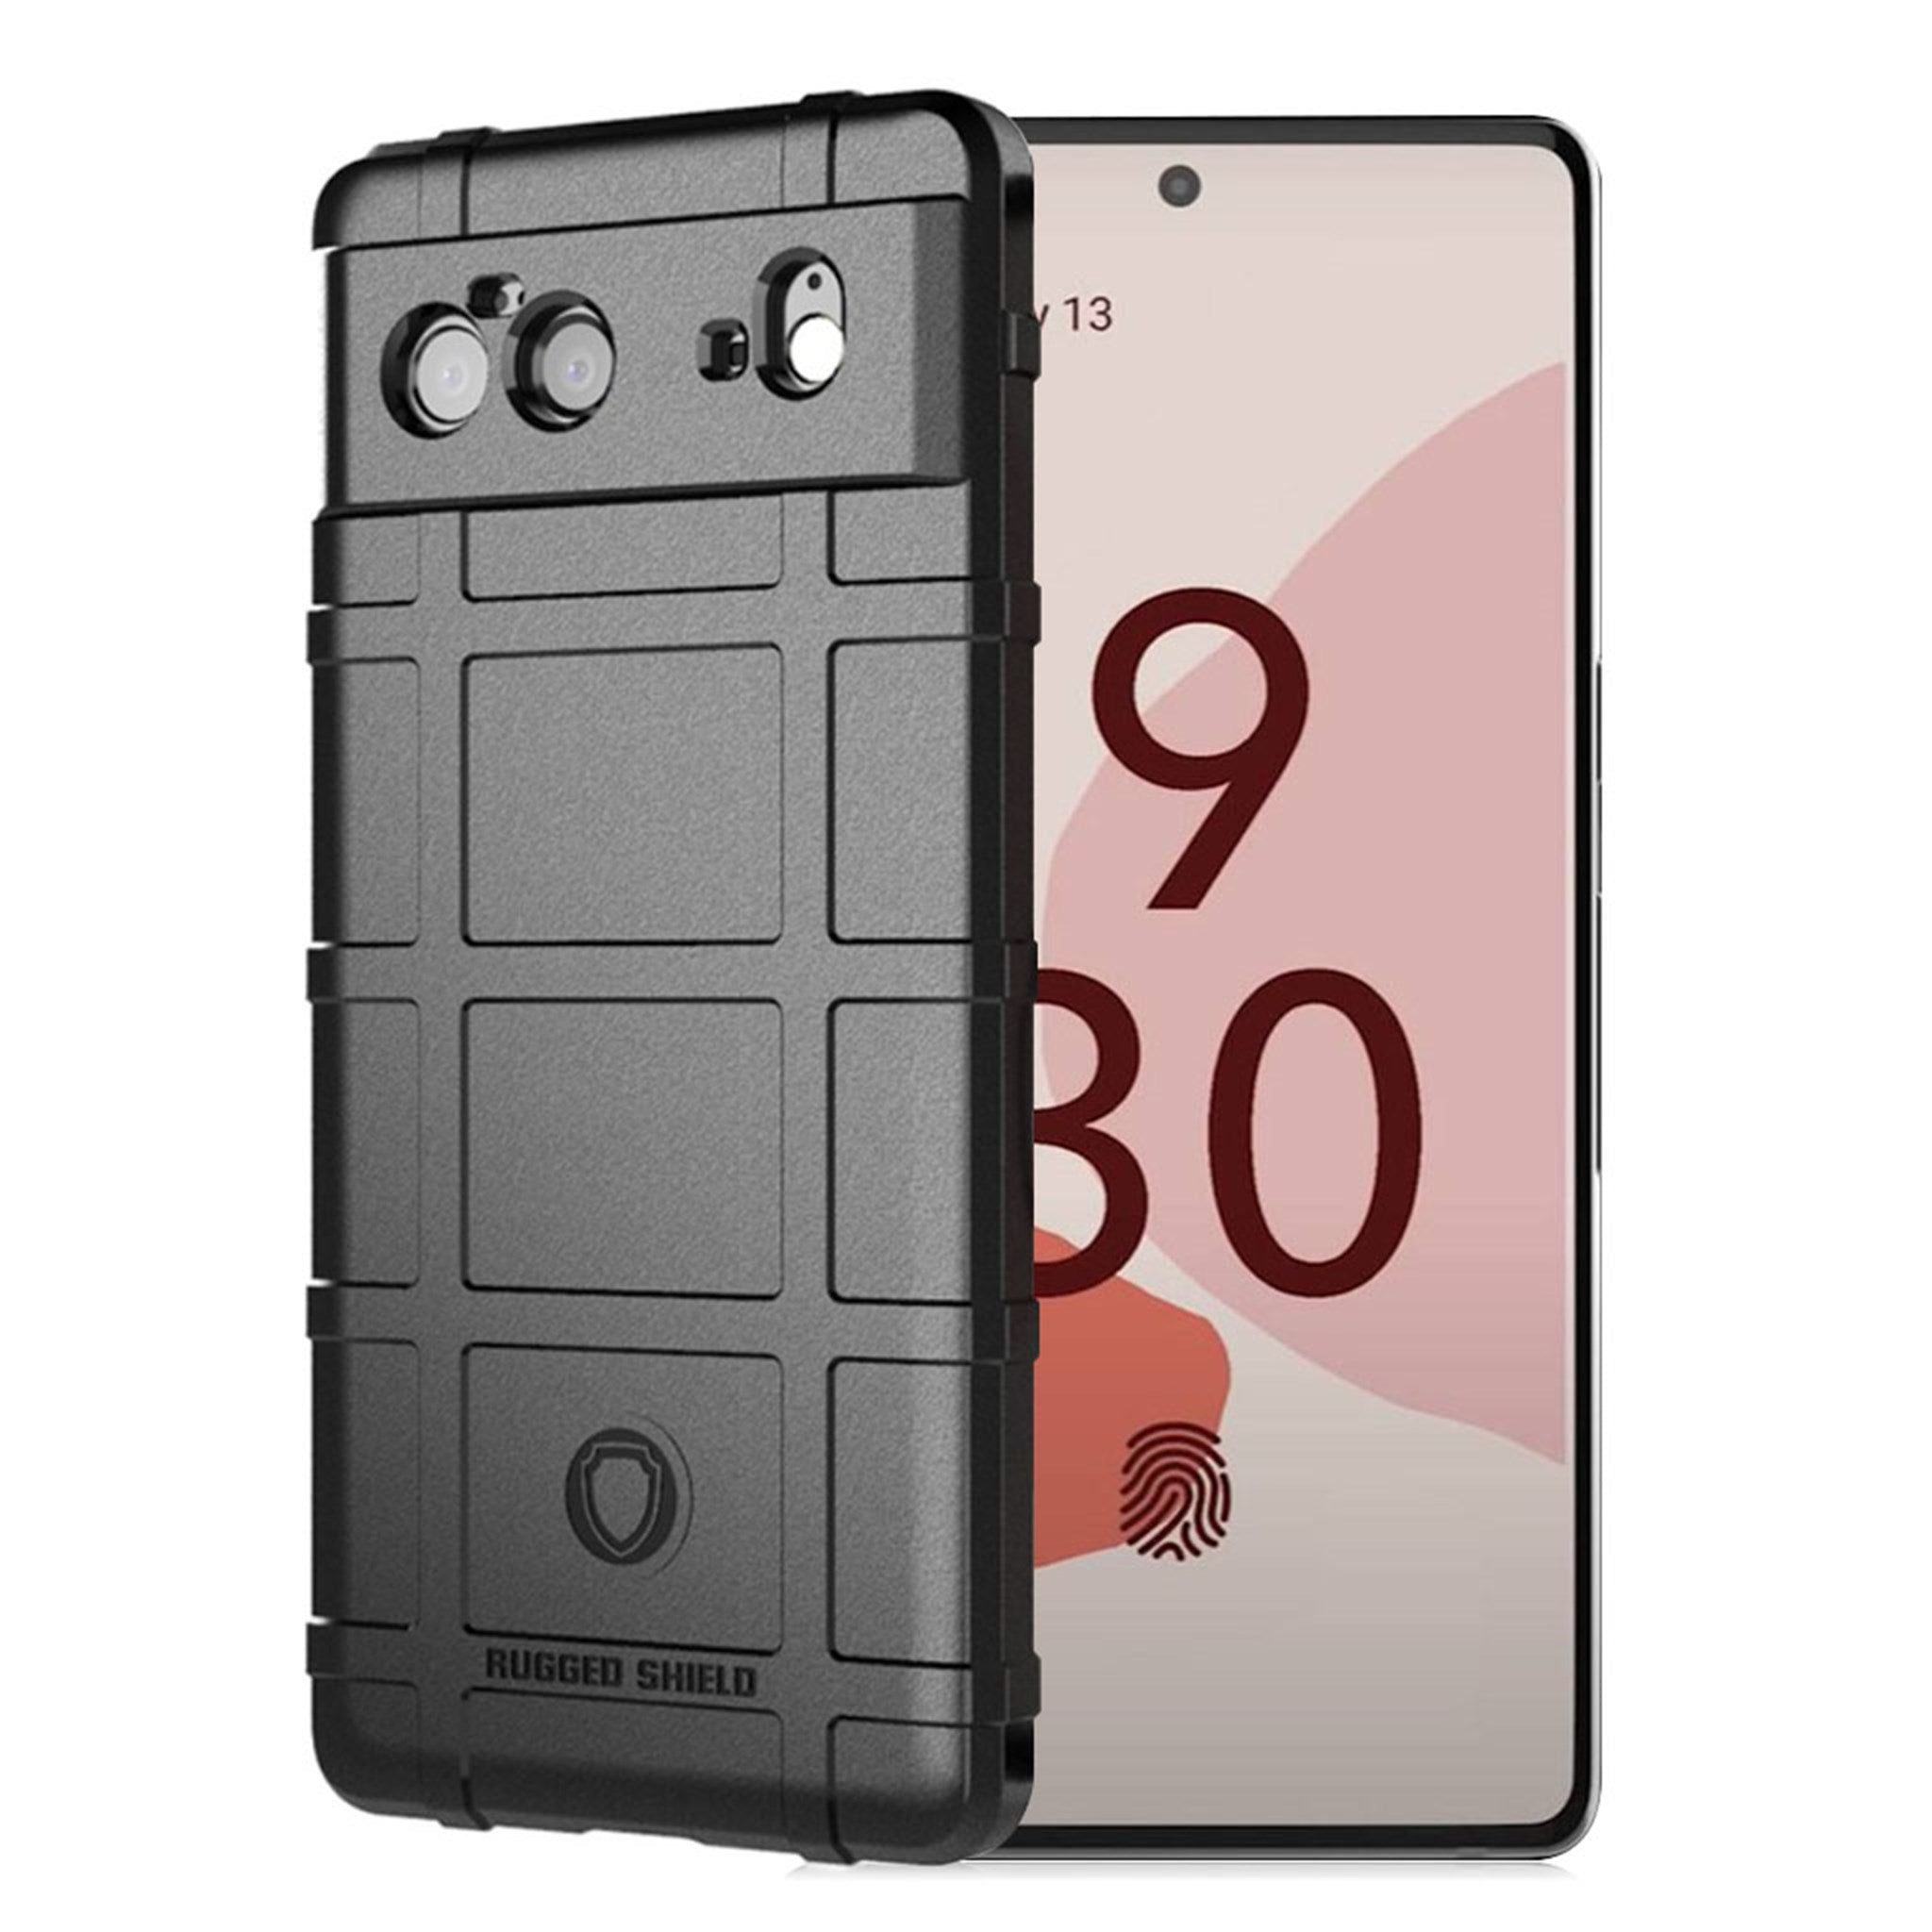 Rugged Shield case - Google Pixel 6 - Black